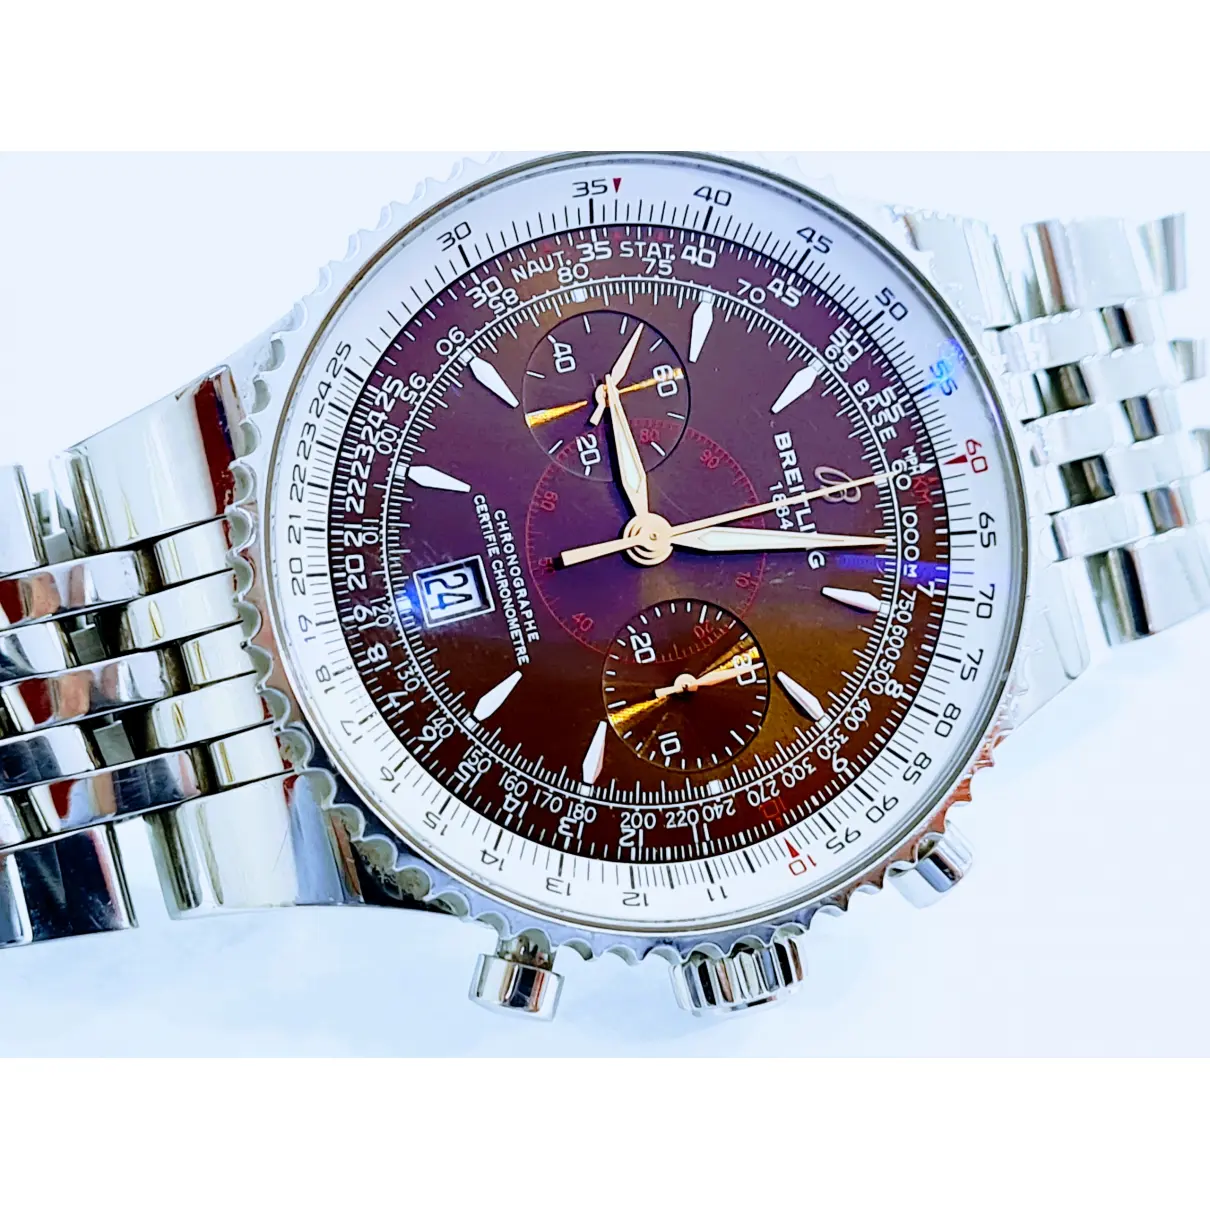 Buy Breitling Navitimer watch online